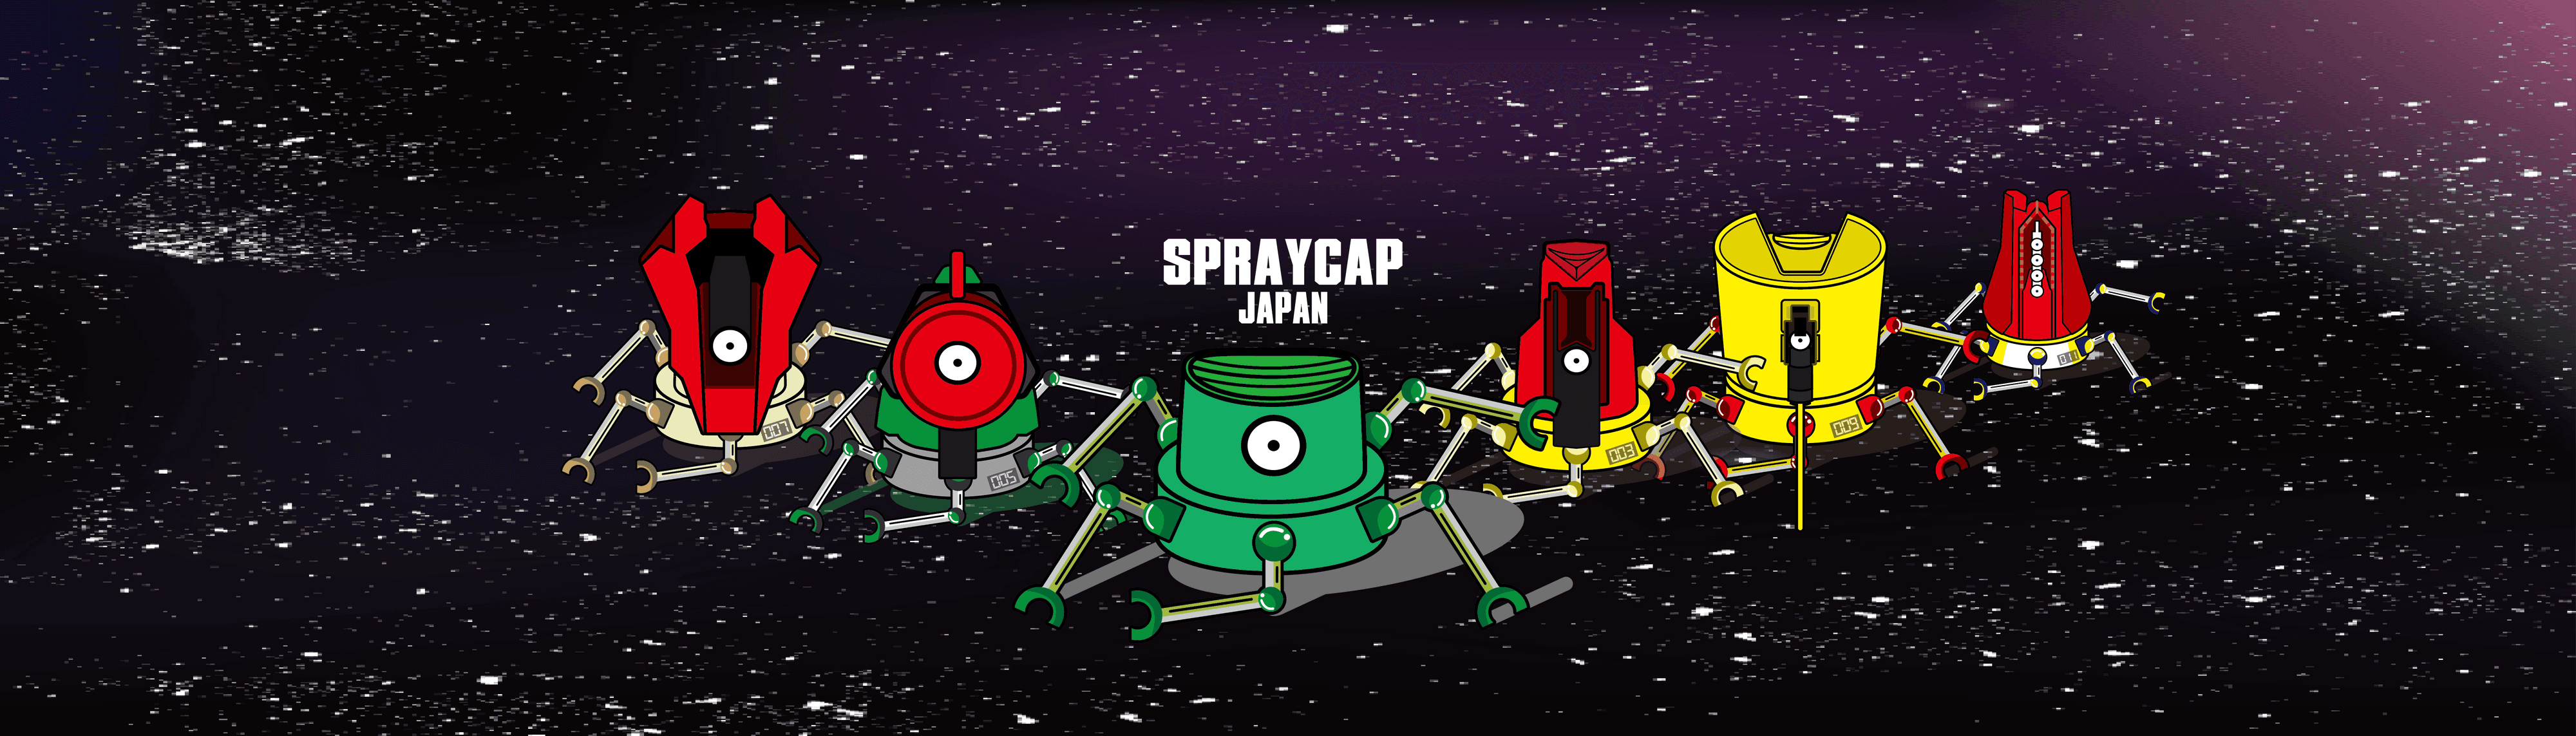 SprayCap-JAPAN banner